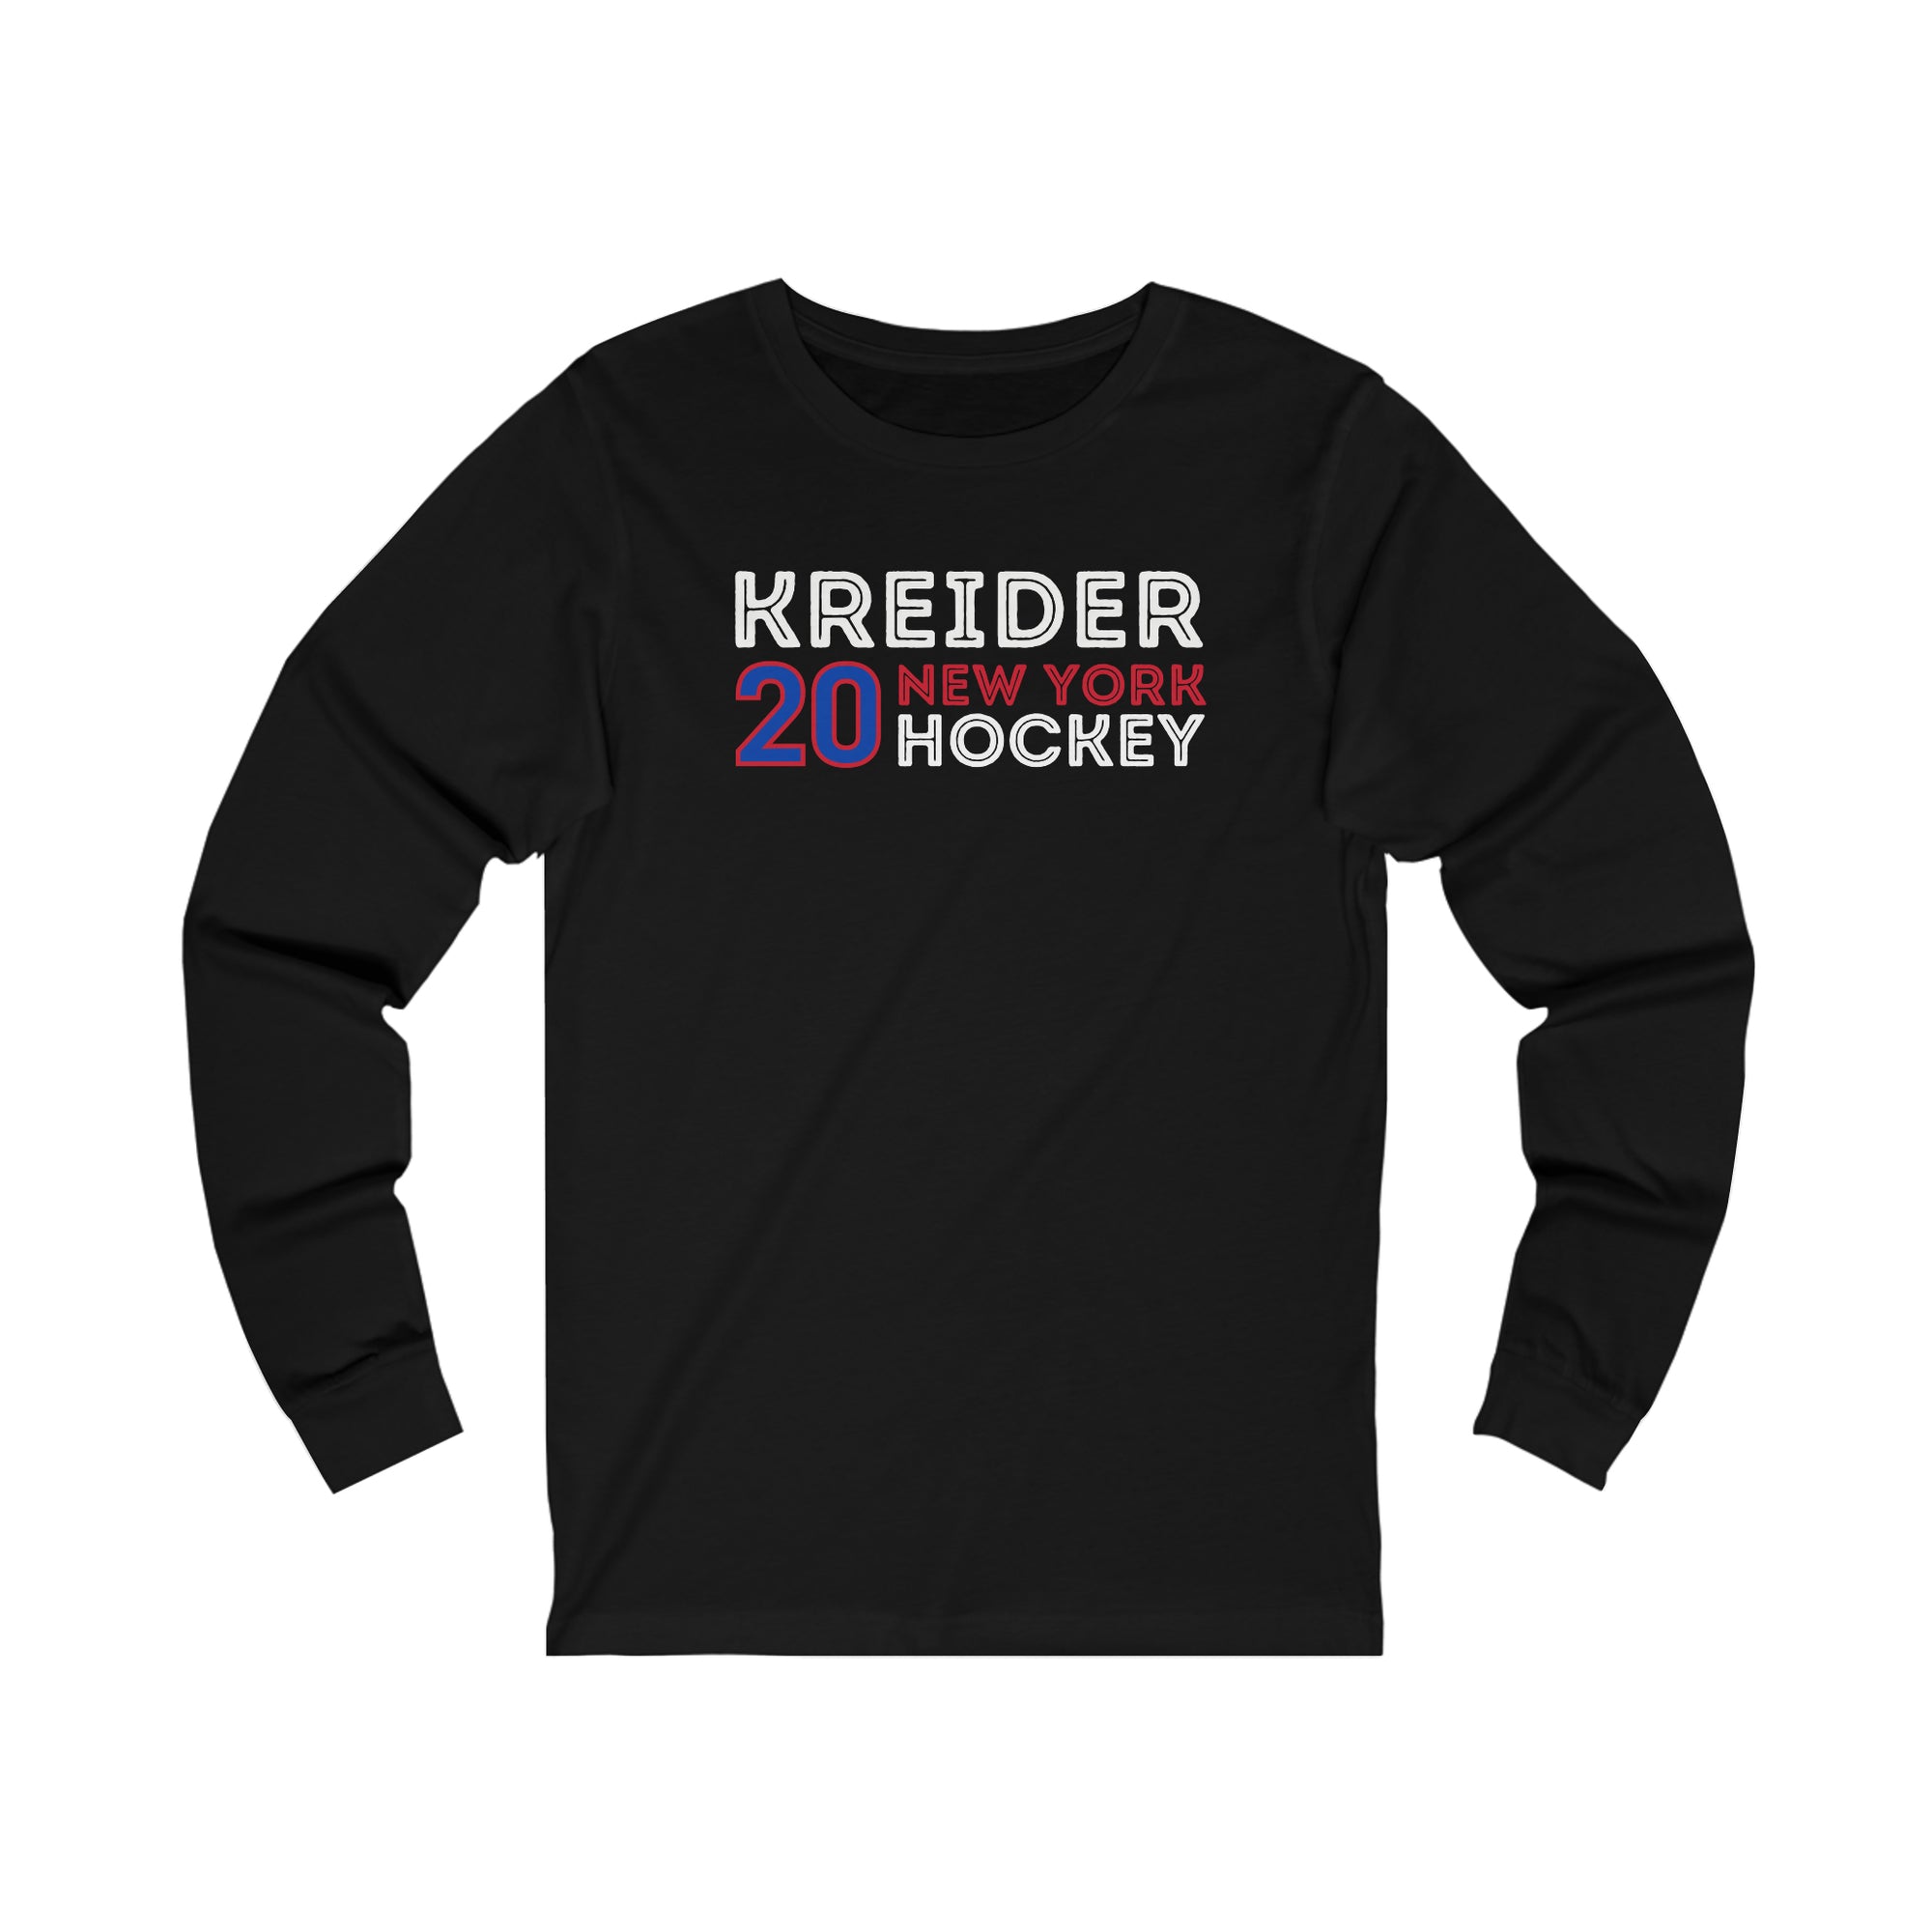 Chris Kreider Shirt